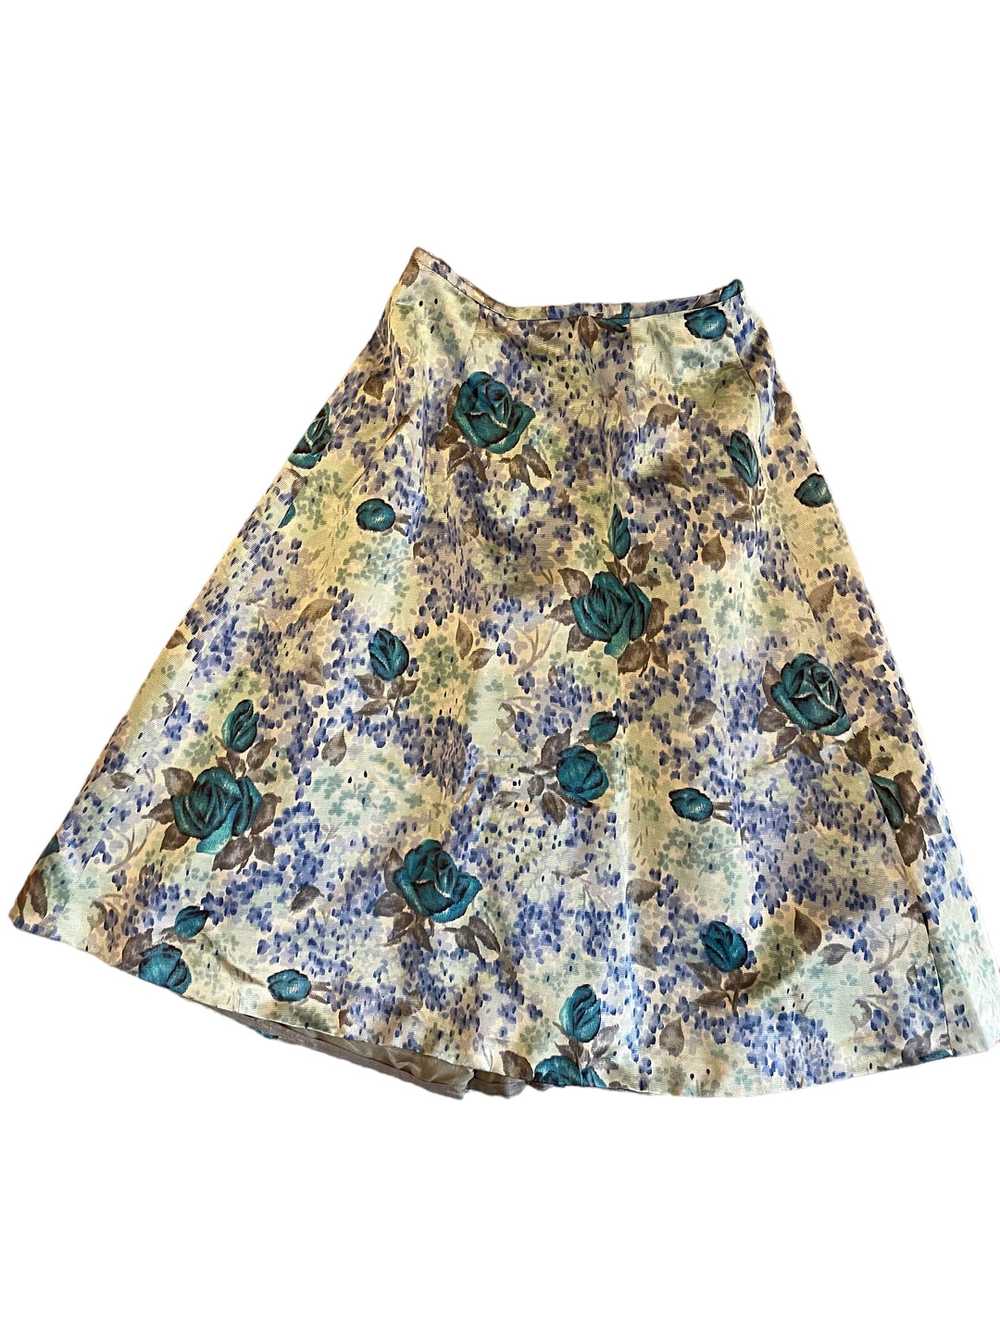 1950's Silk Floral Skirt - image 1